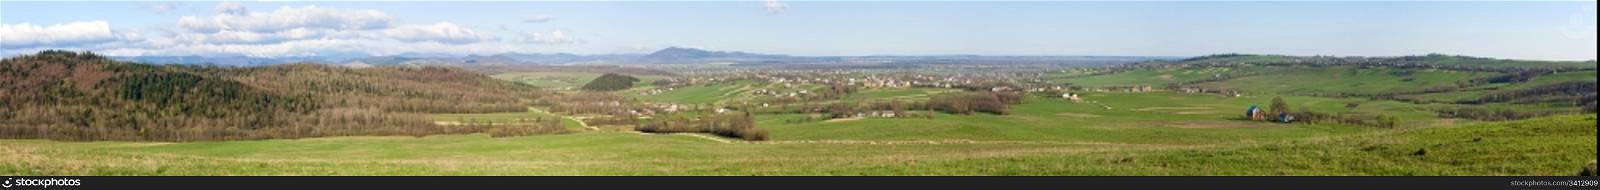 spring foothill panorama landscape (Carpathian, Ukraine). Eight shots stitch image.